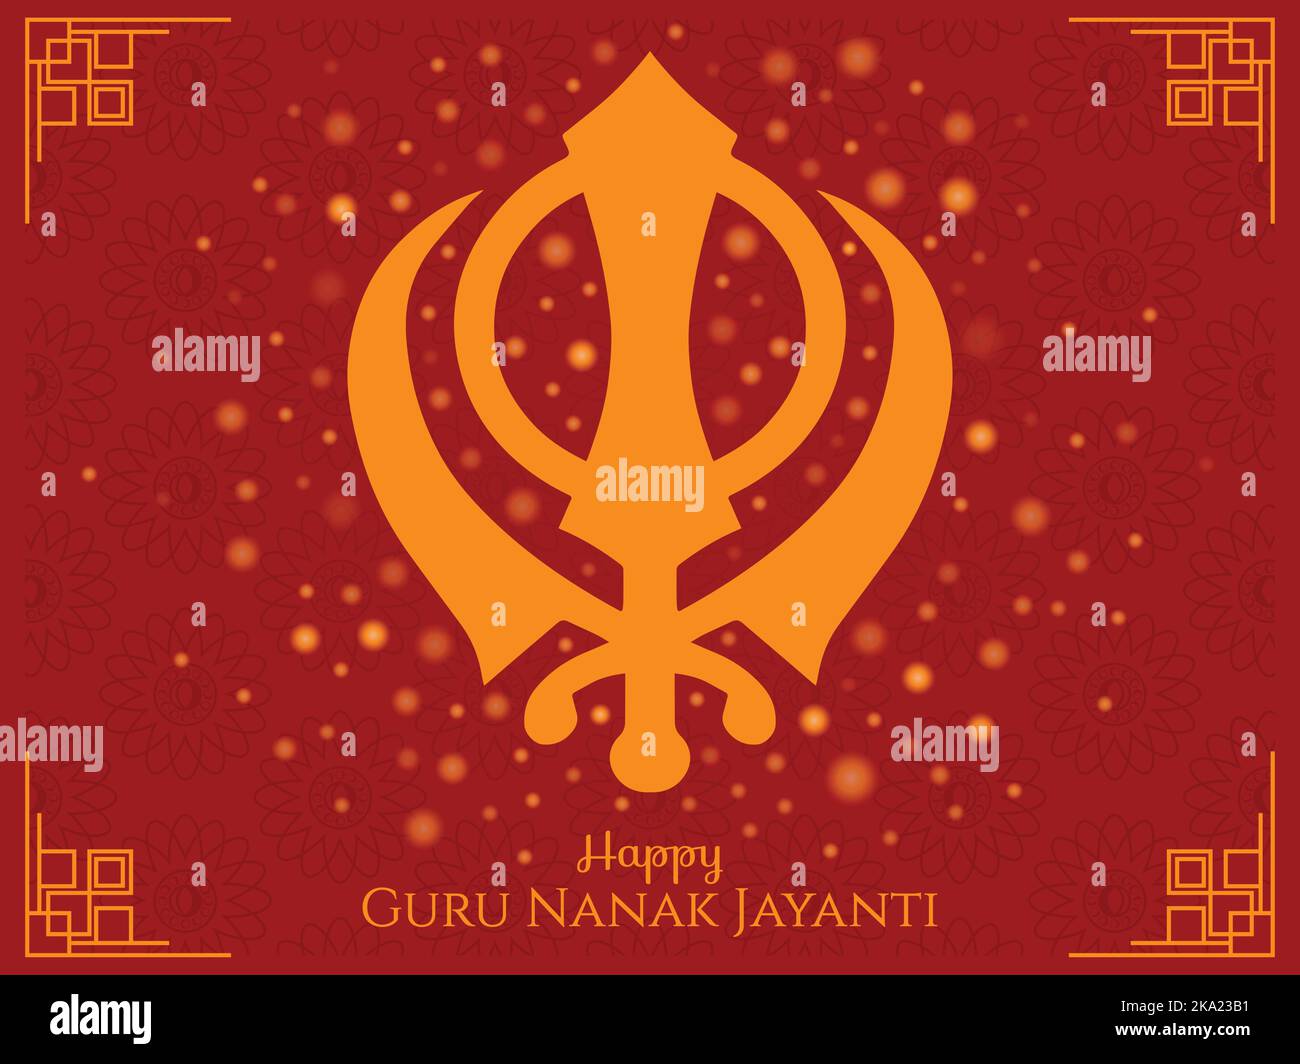 Happy Guru Nanak Jayanti Gurpurab Poster Vector Illustration. Golden and red Khanda ornamental graphic design. Social media post, website, celebration Stock Vector